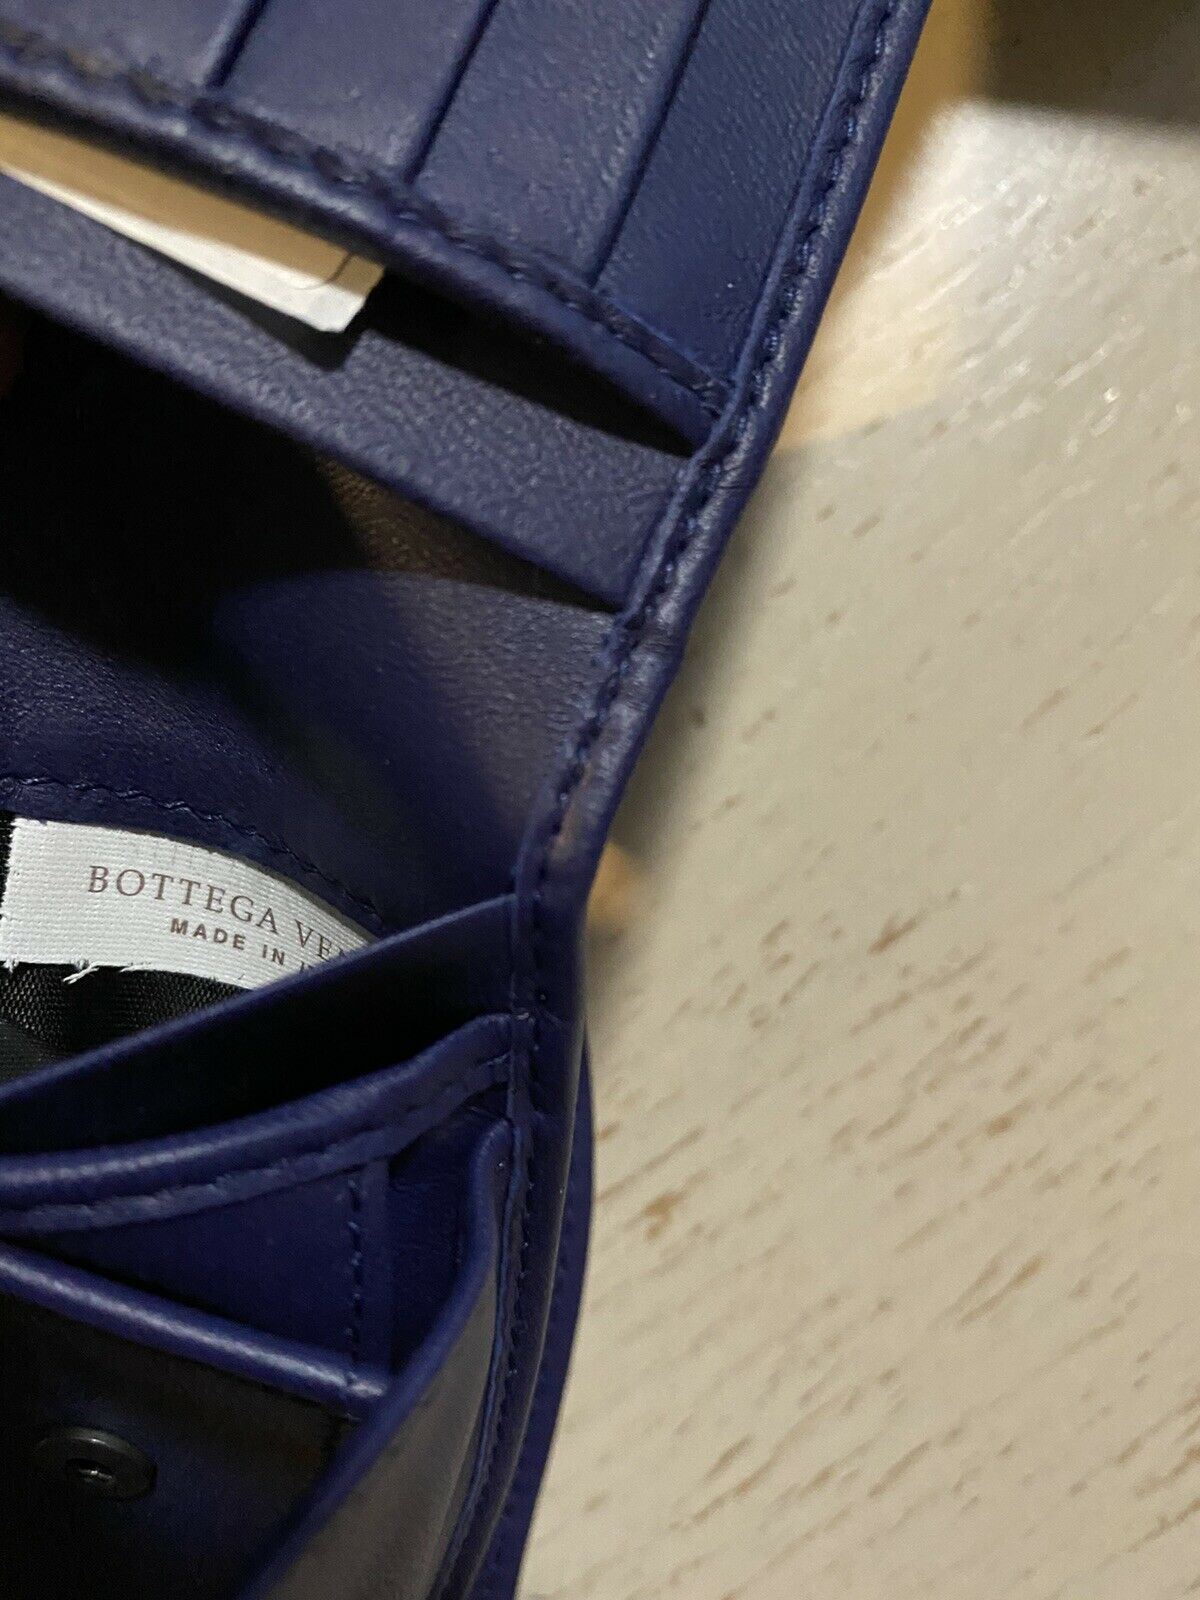 New Bottega Veneta Mens Wallet Slate Color Atlantic Blue 148324  Italy